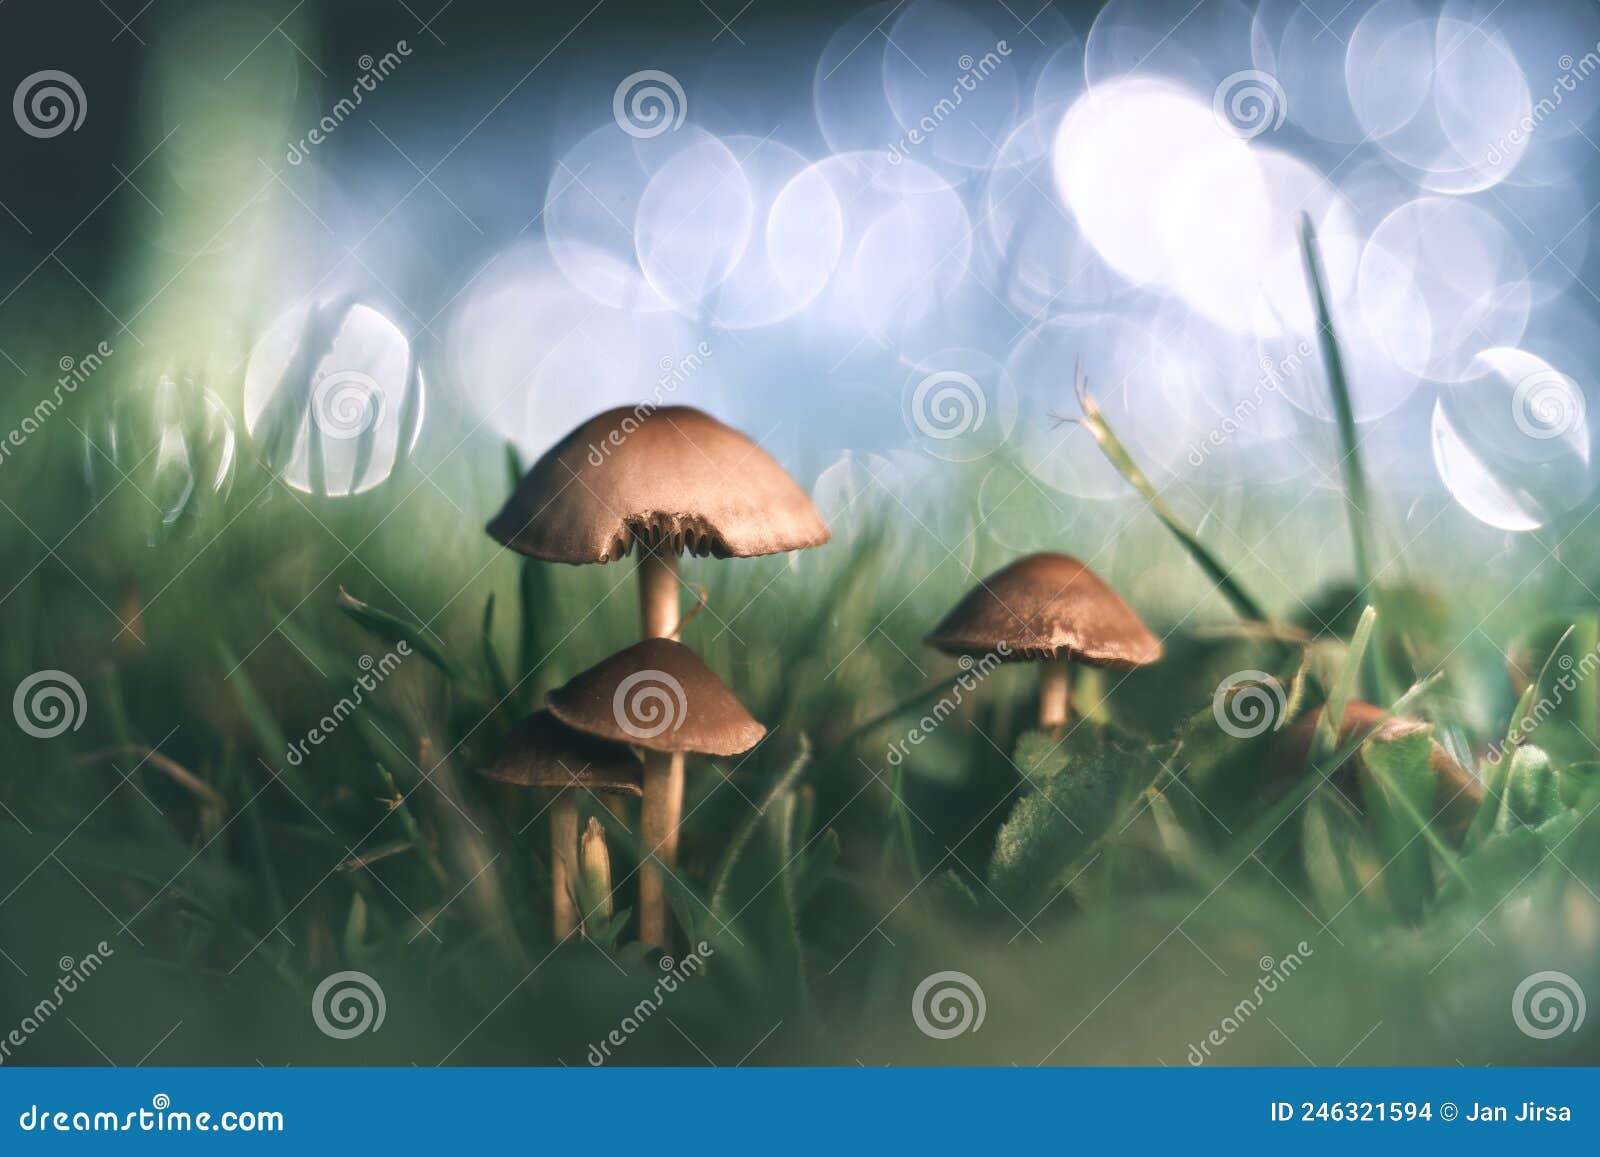 Mushrooms Wallpaper 4K Colorful AI art 11715